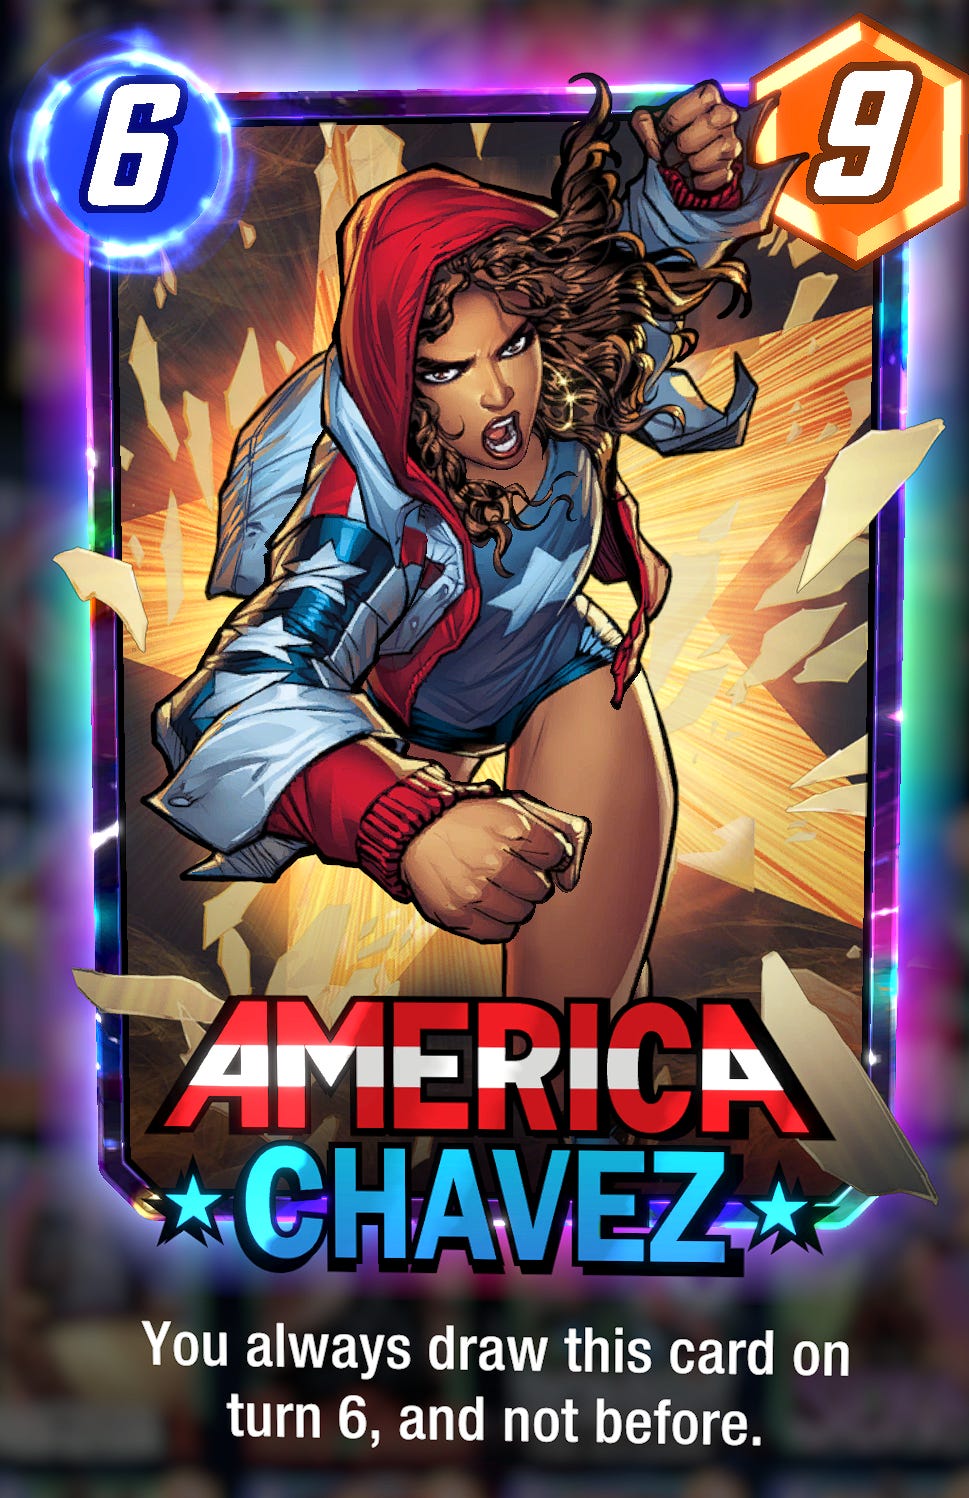 An infinite America Chavez